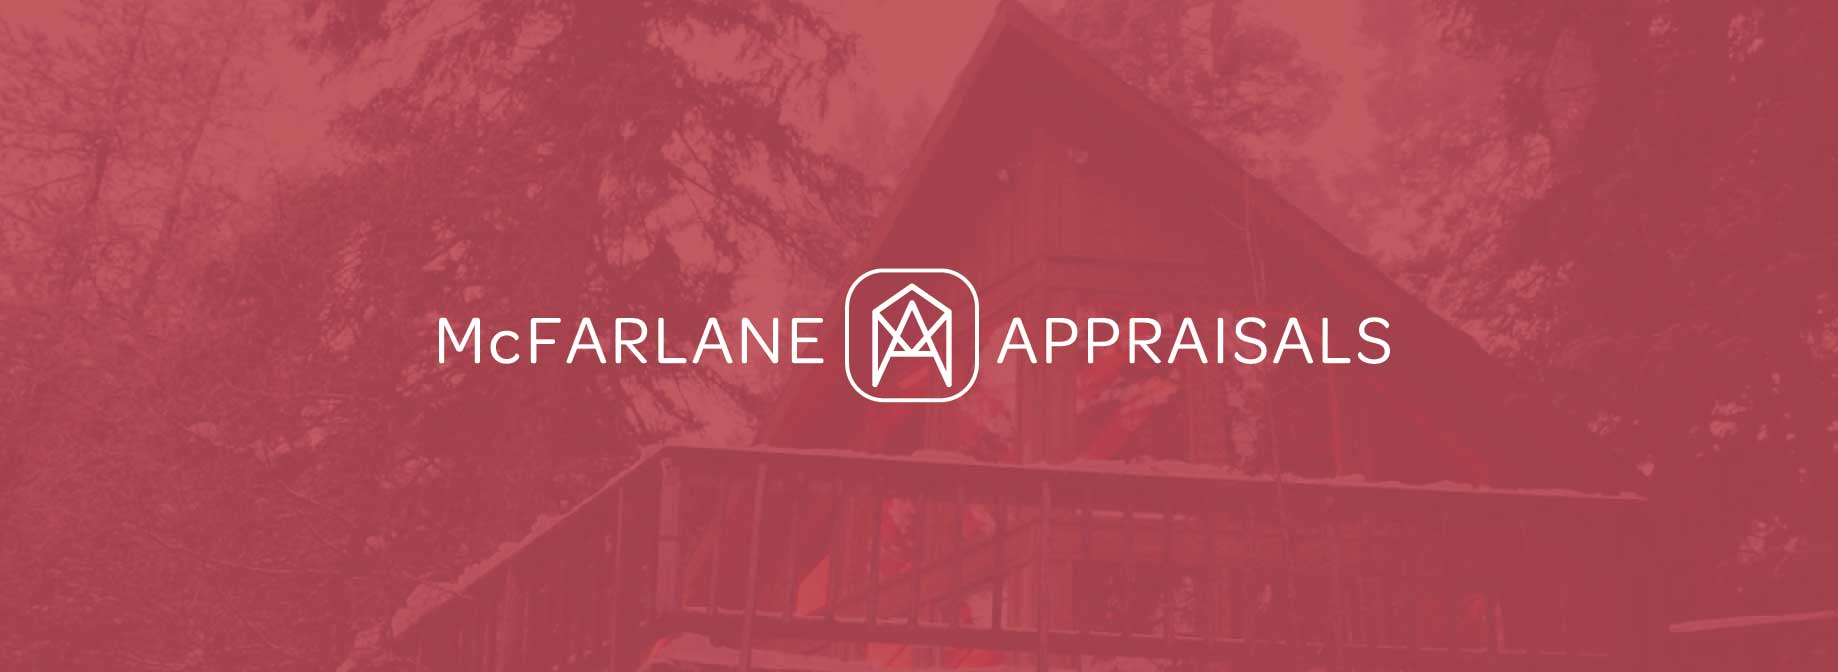 McFarlane Appraisals Logo Portfolio Panel